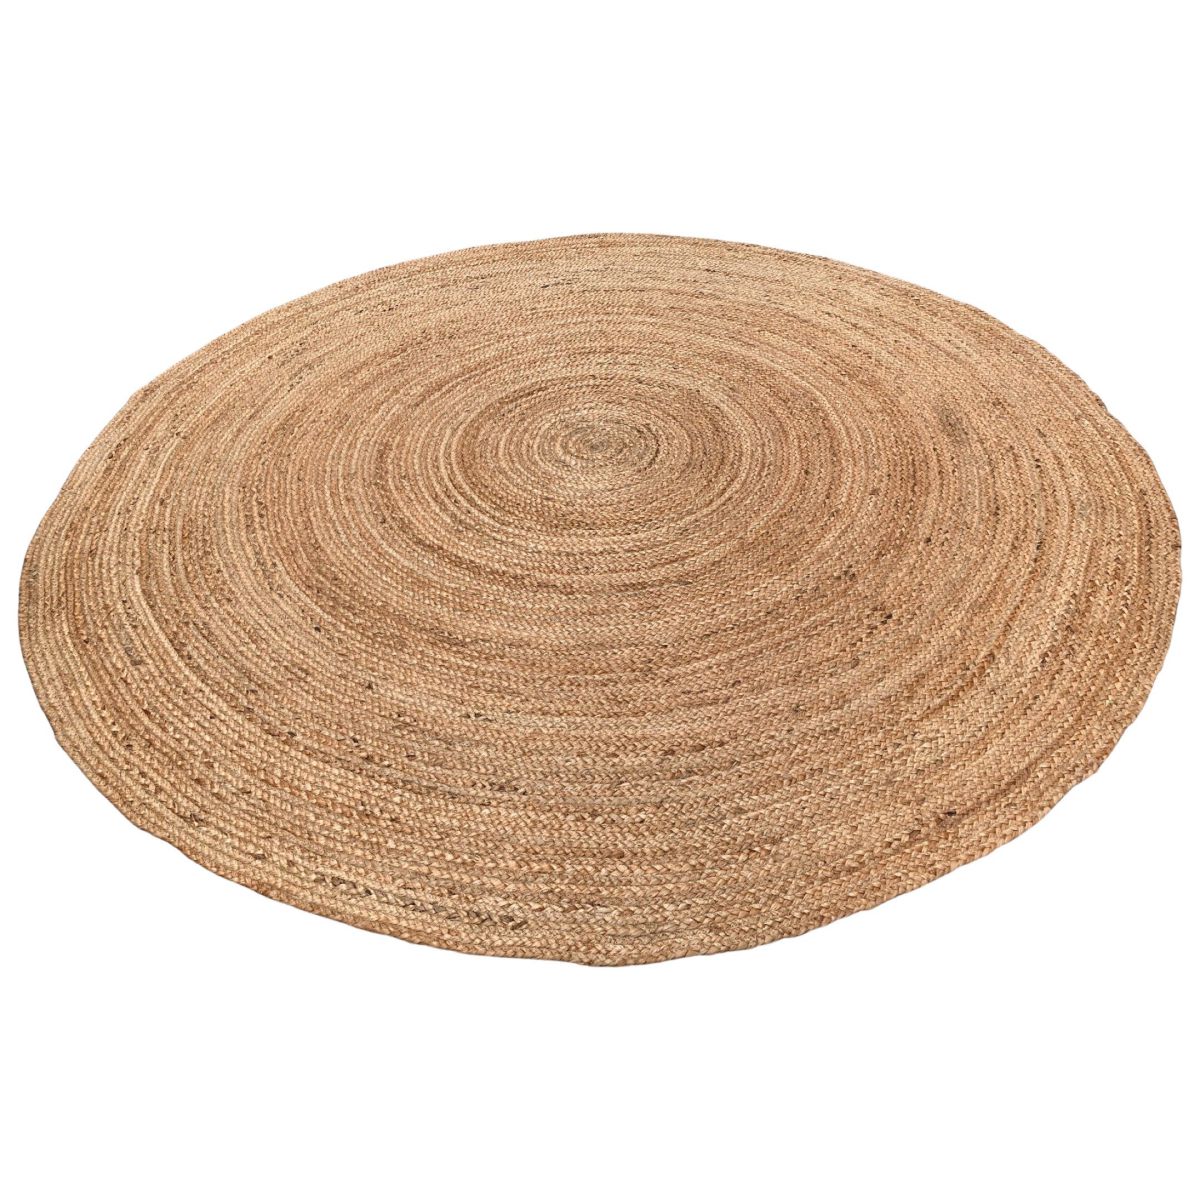 rug braided jute natural round 300cm